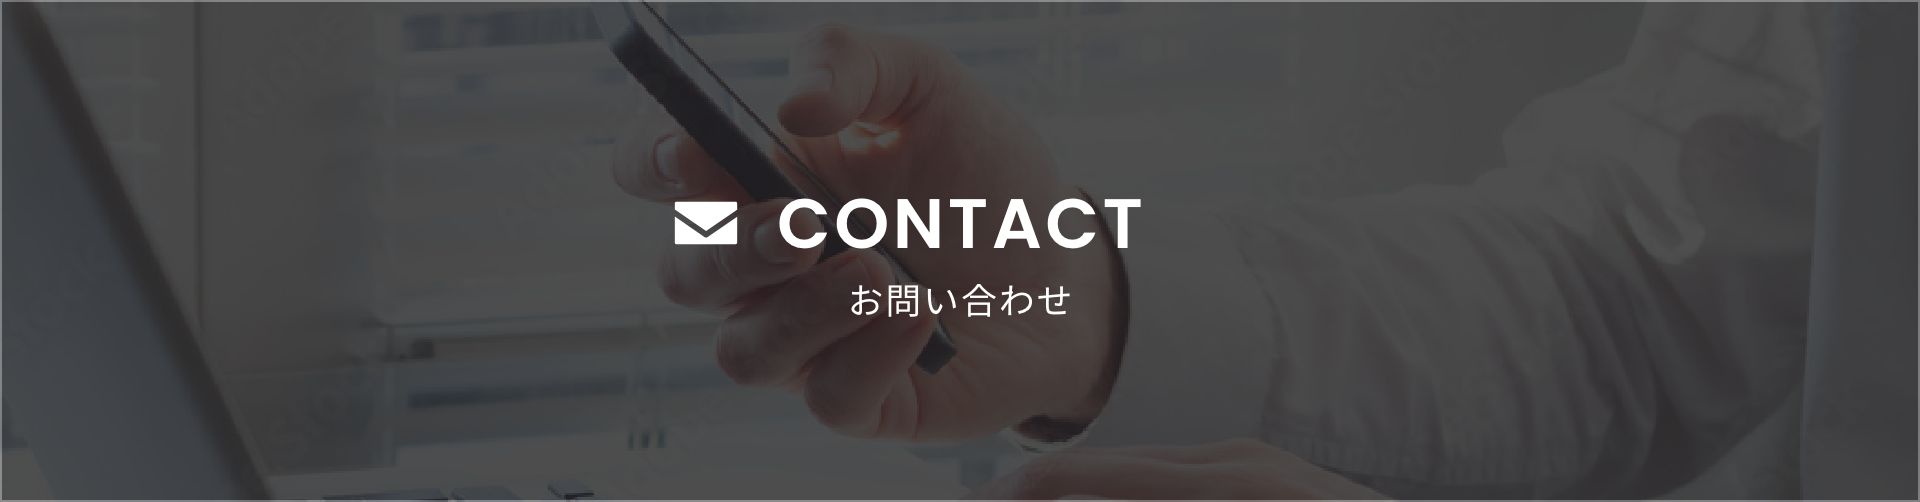 contact お問い合わせ -banner-